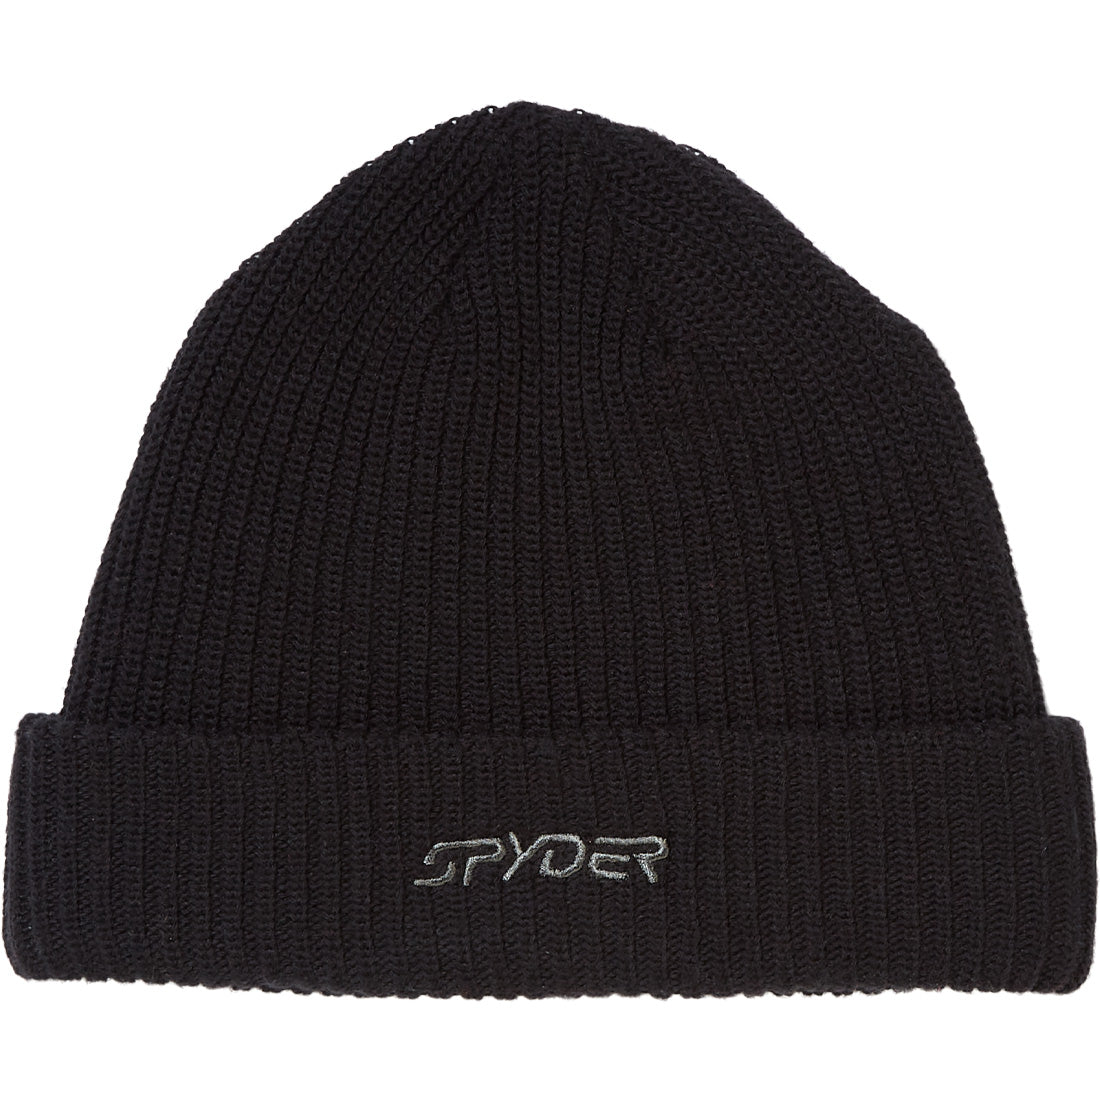 Spyder Logan Hat - Men's